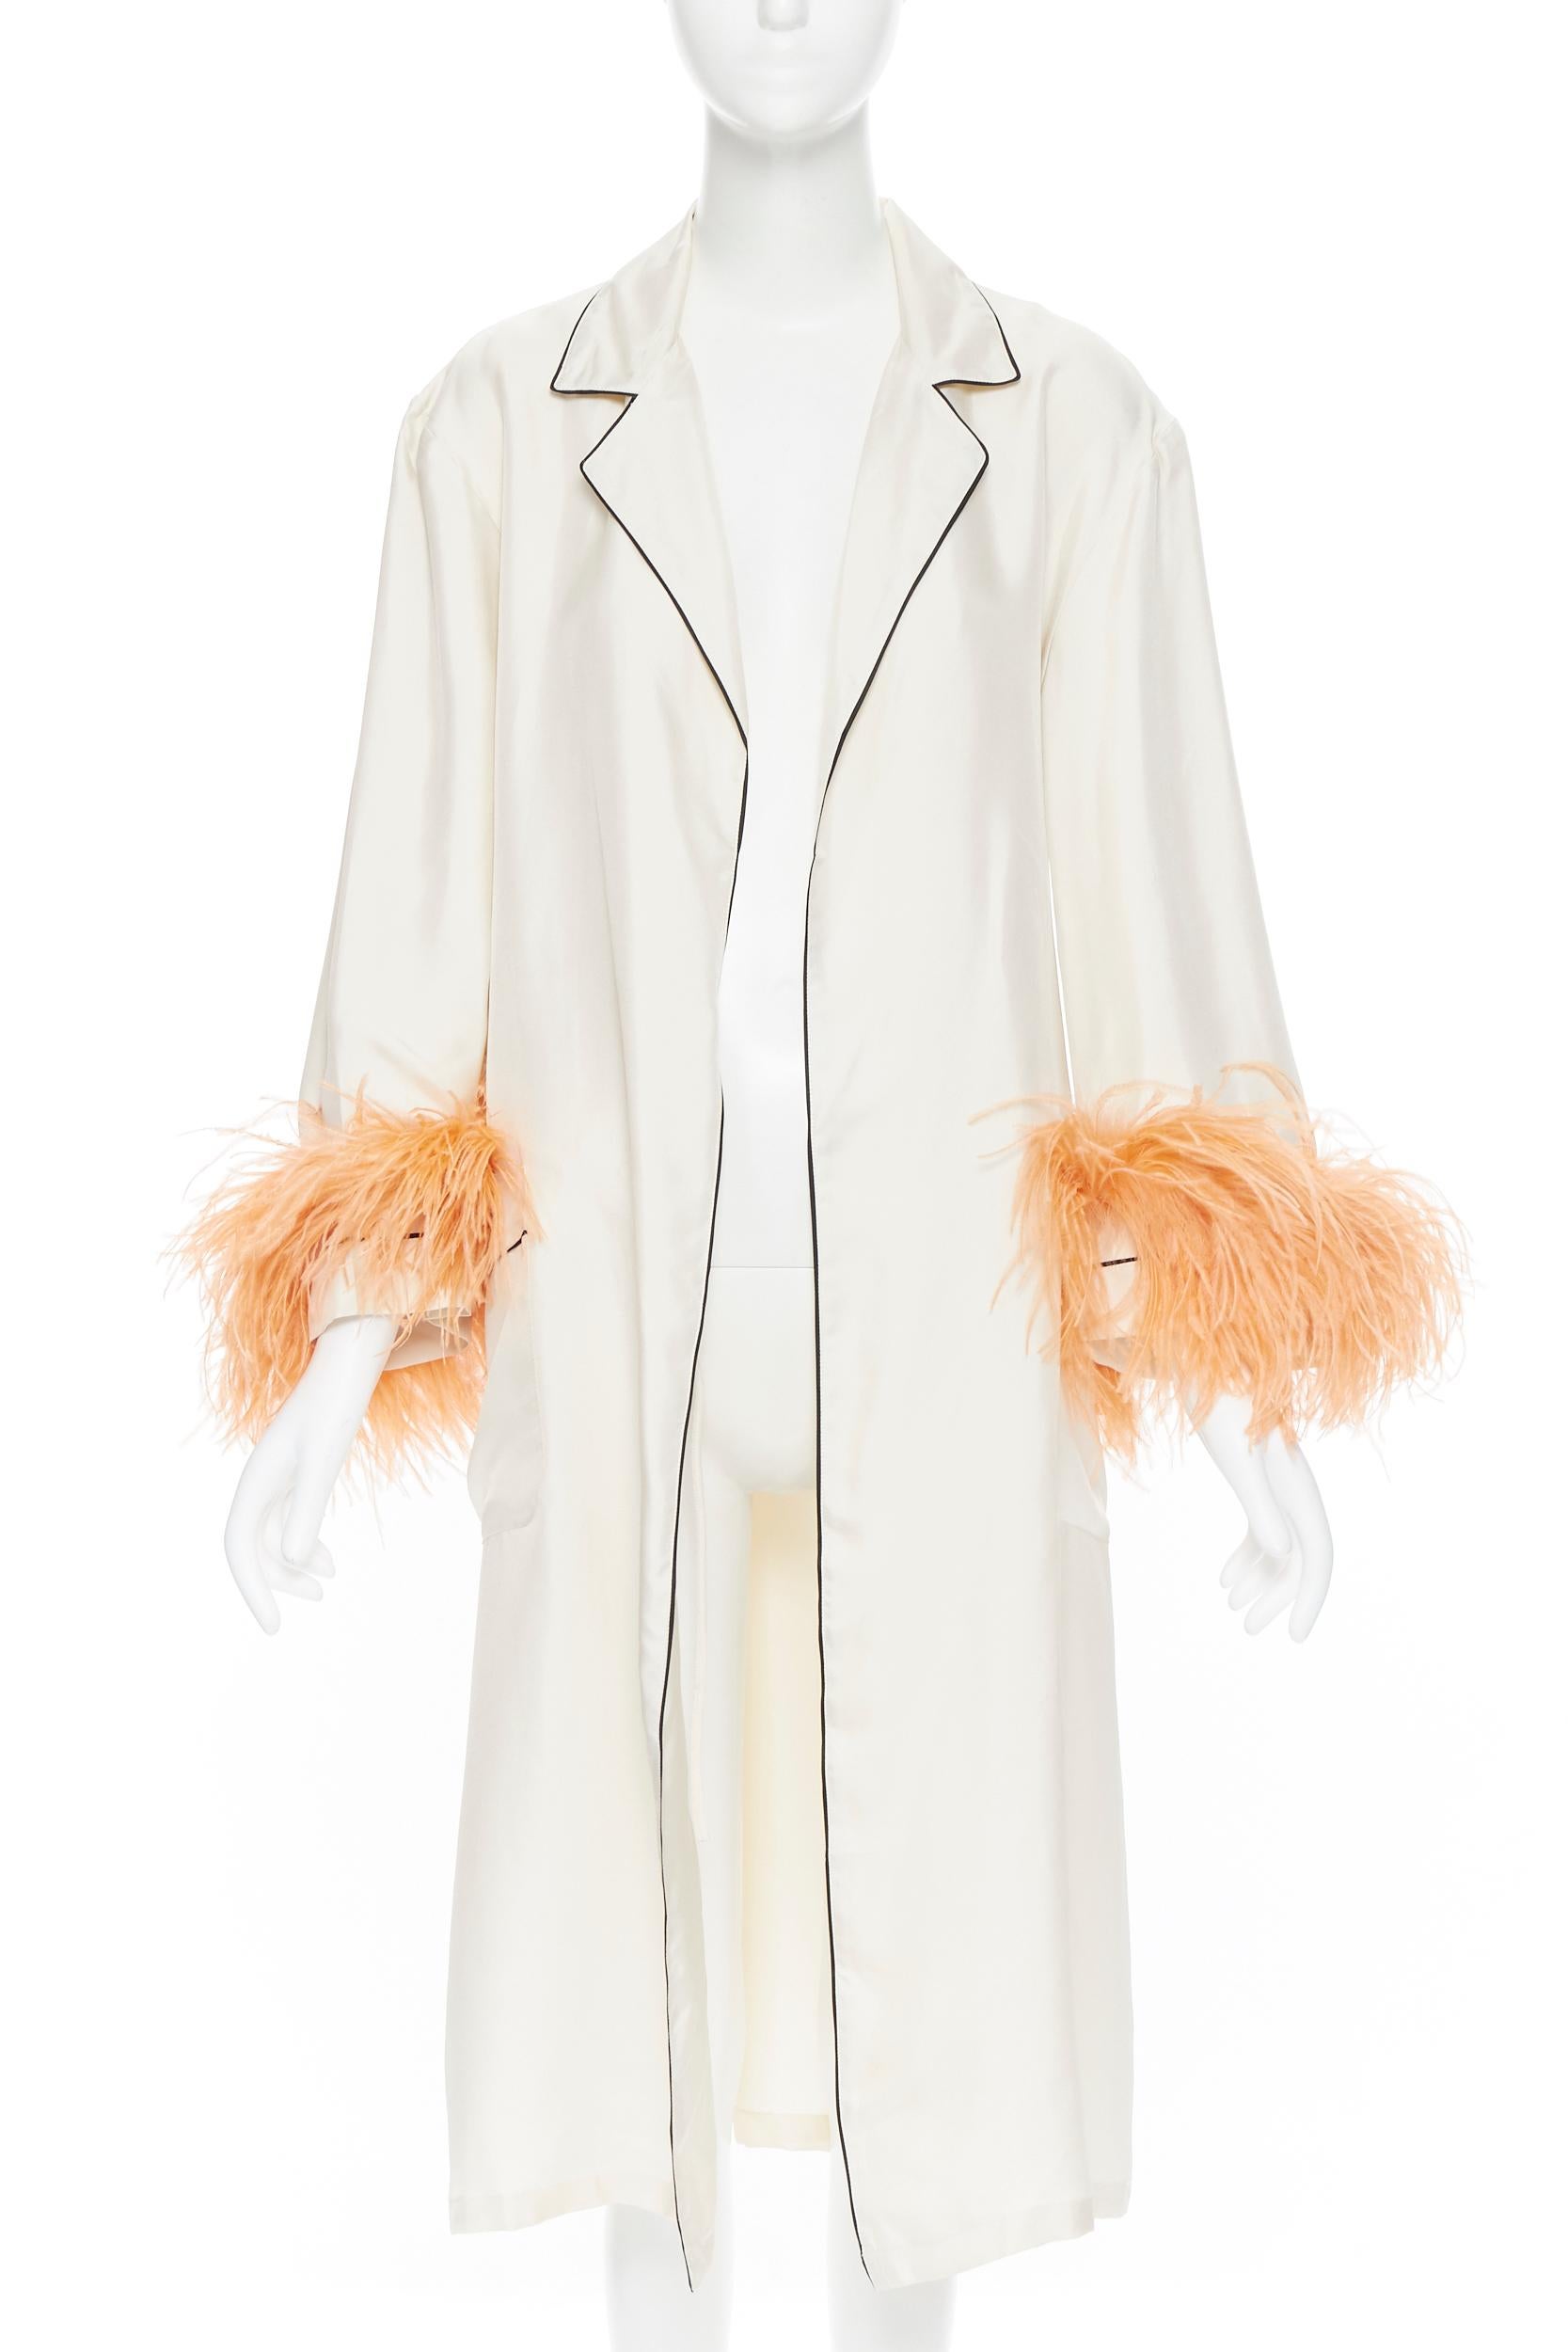 Beige new PRADA 100% silk cream black piping orange feather cuff robe jacket Rihanna M